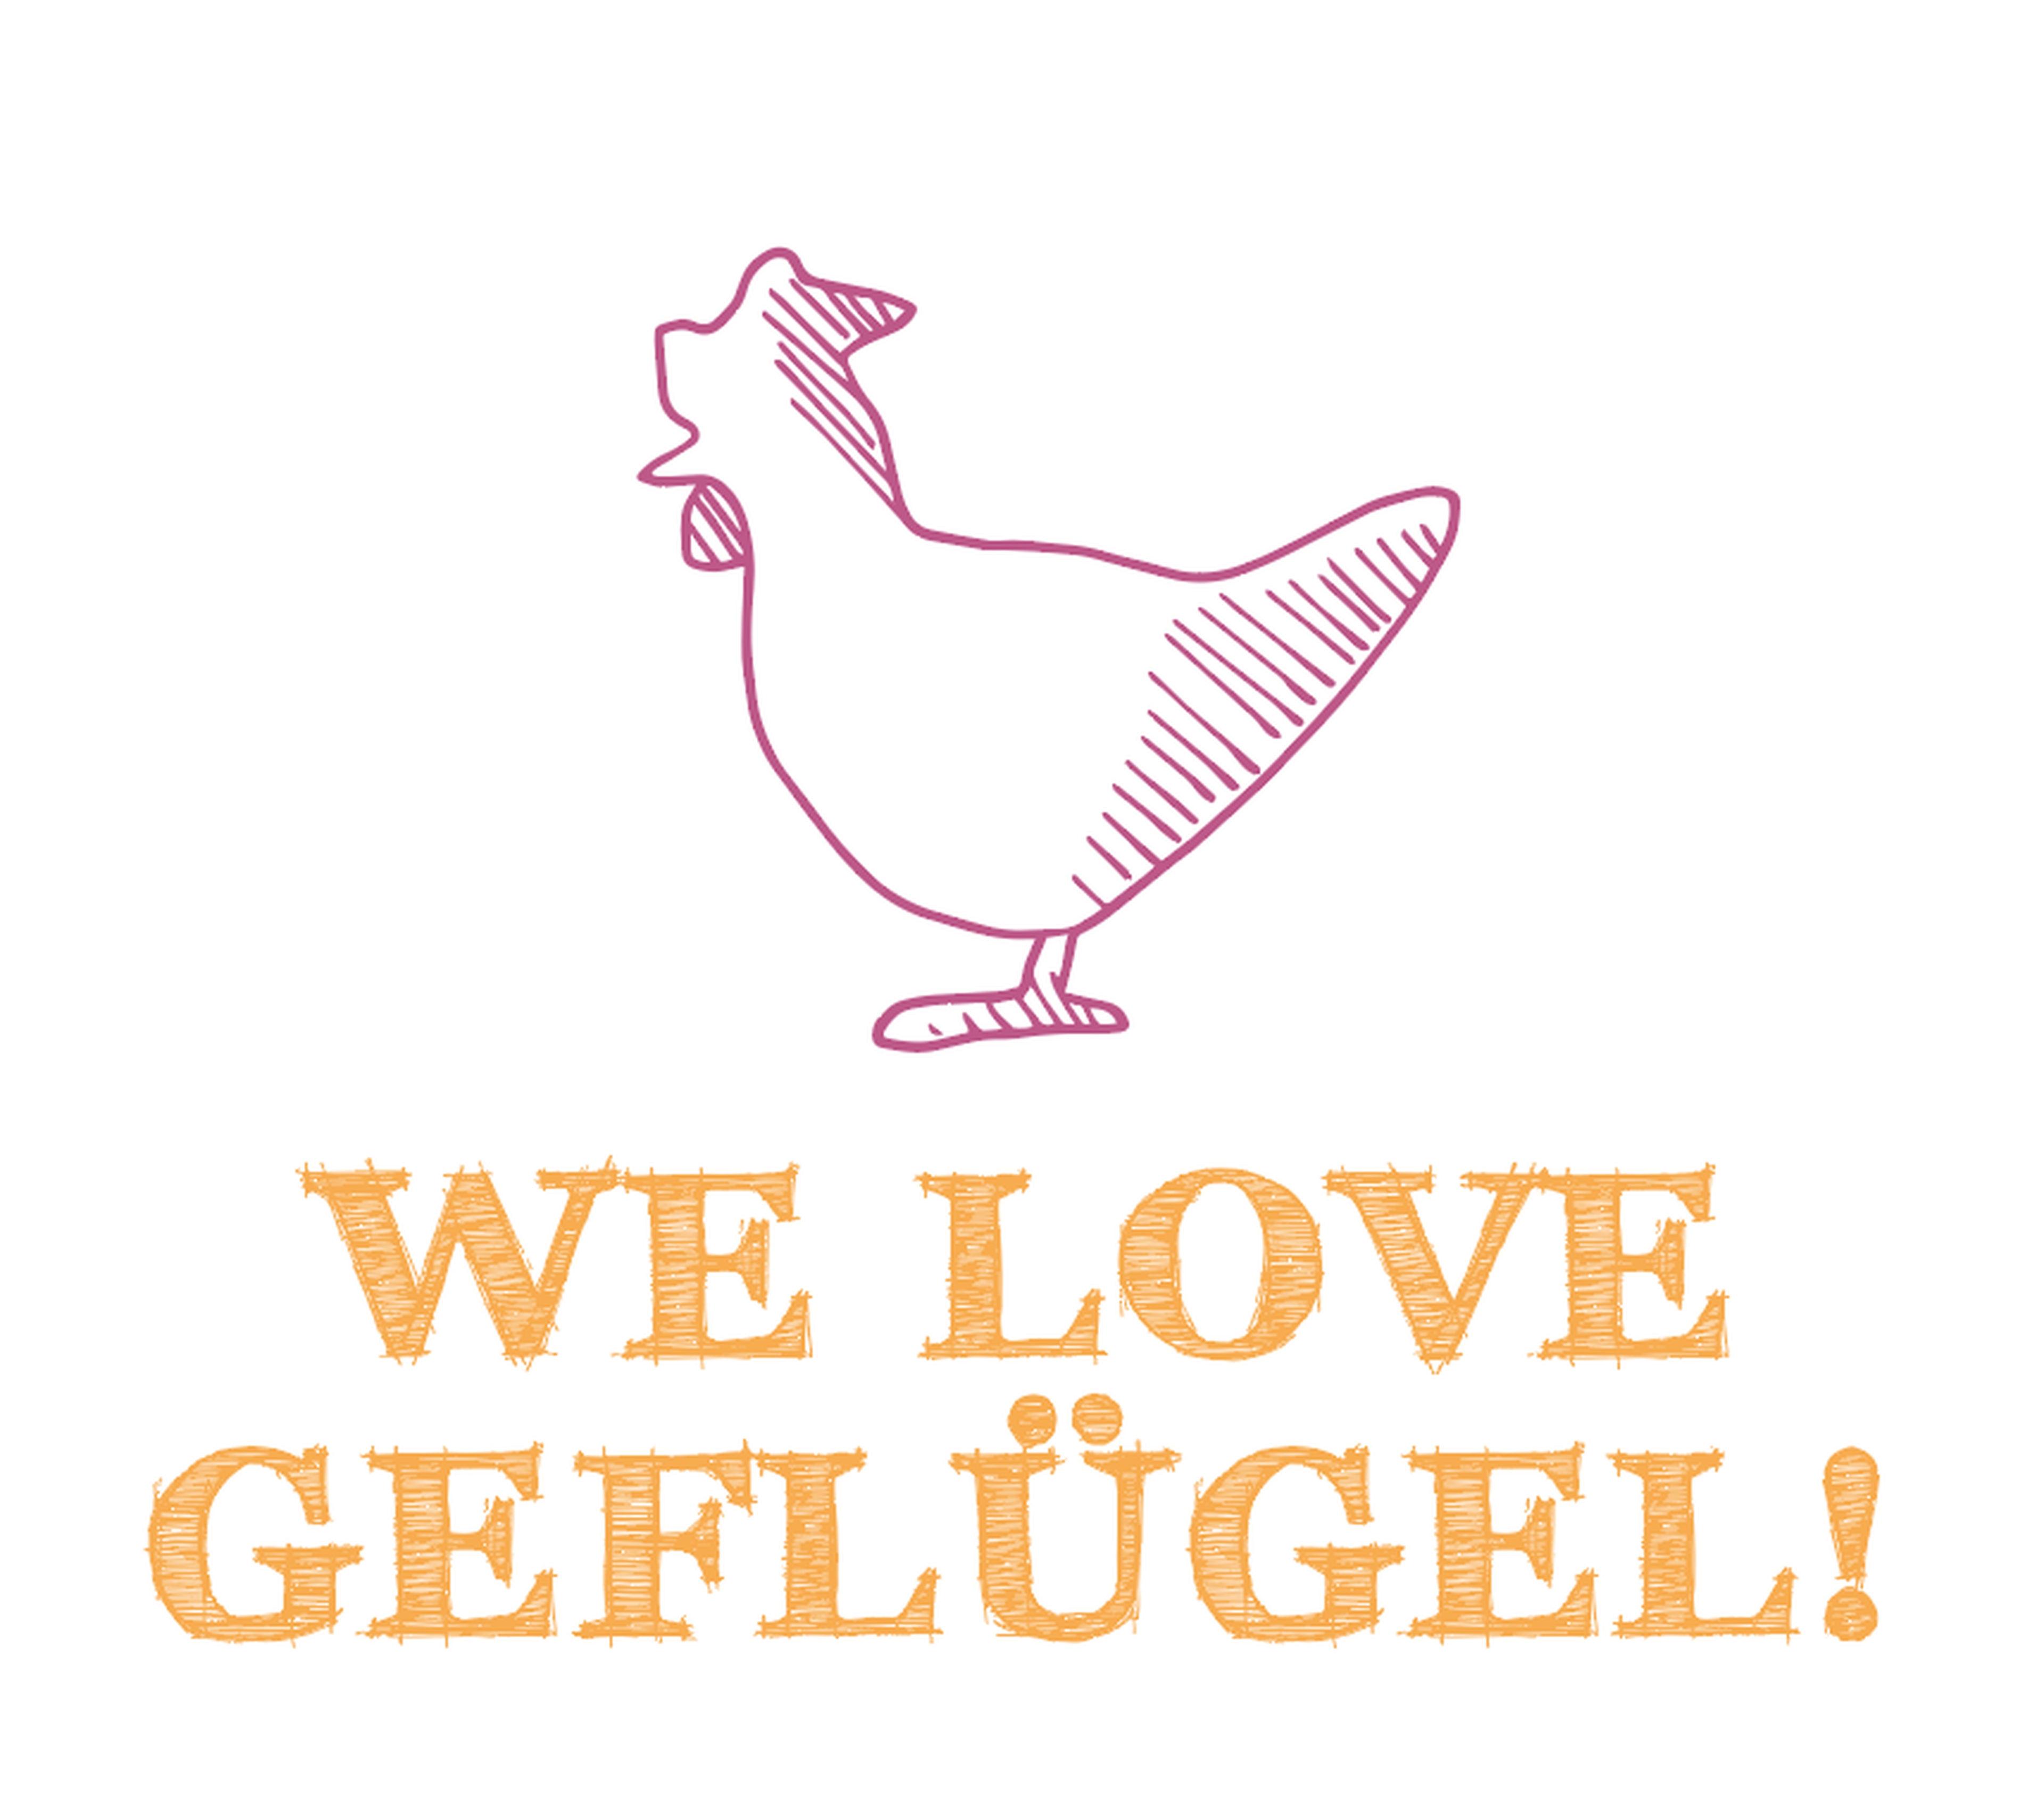 We love Geflügel!